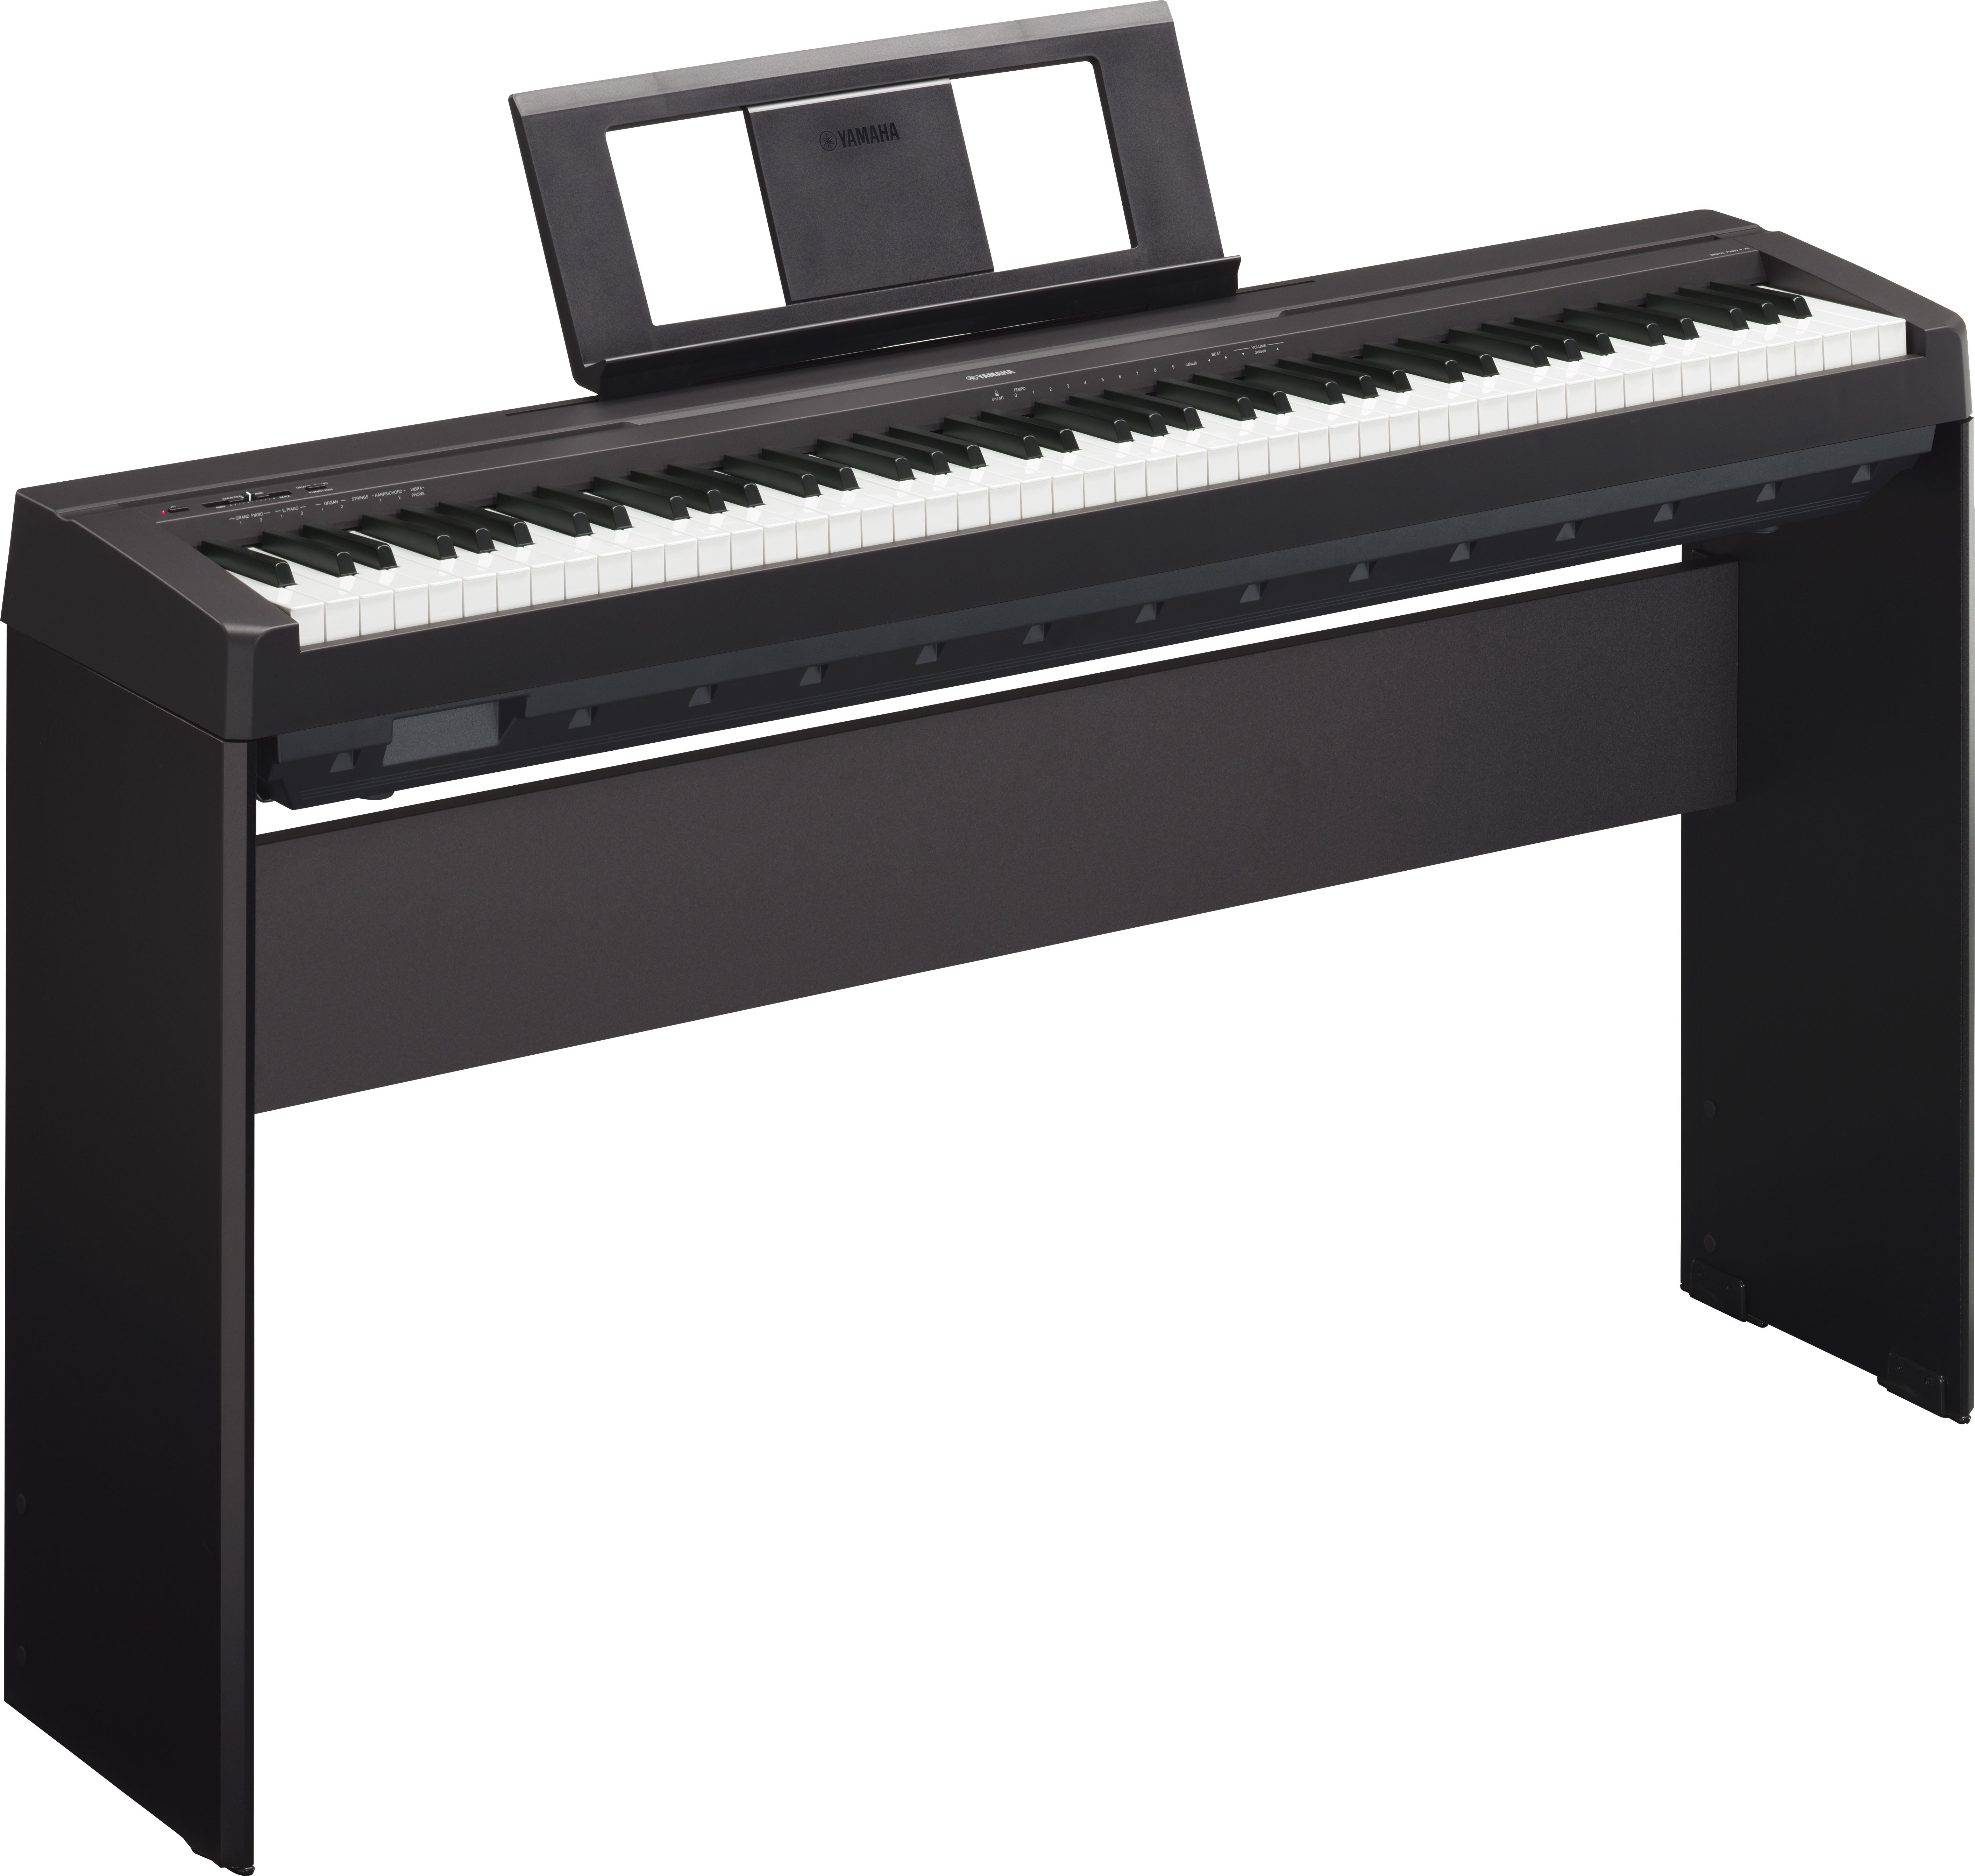 perdí mi camino recoger En expansión P-45 - Overview - Portables - Pianos - Musical Instruments - Products -  Yamaha USA